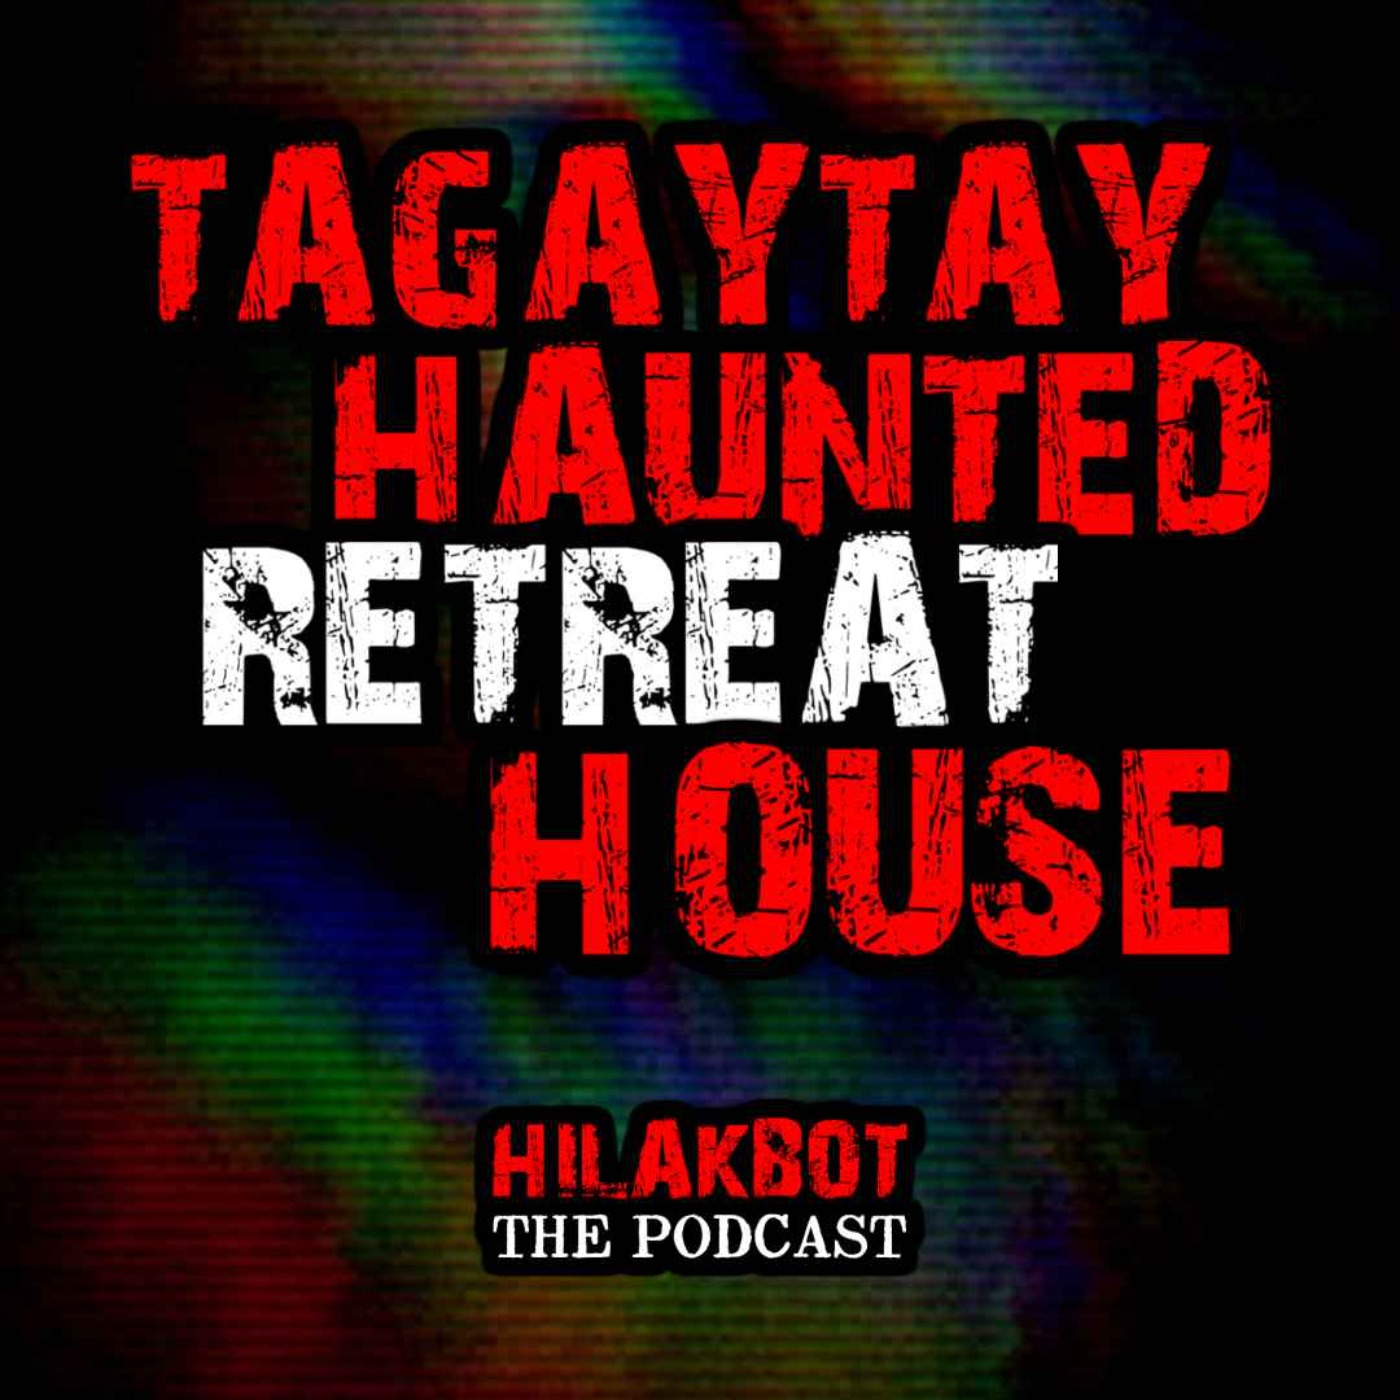 TAGAYTAY HAUNTED RETREAT HOUSE